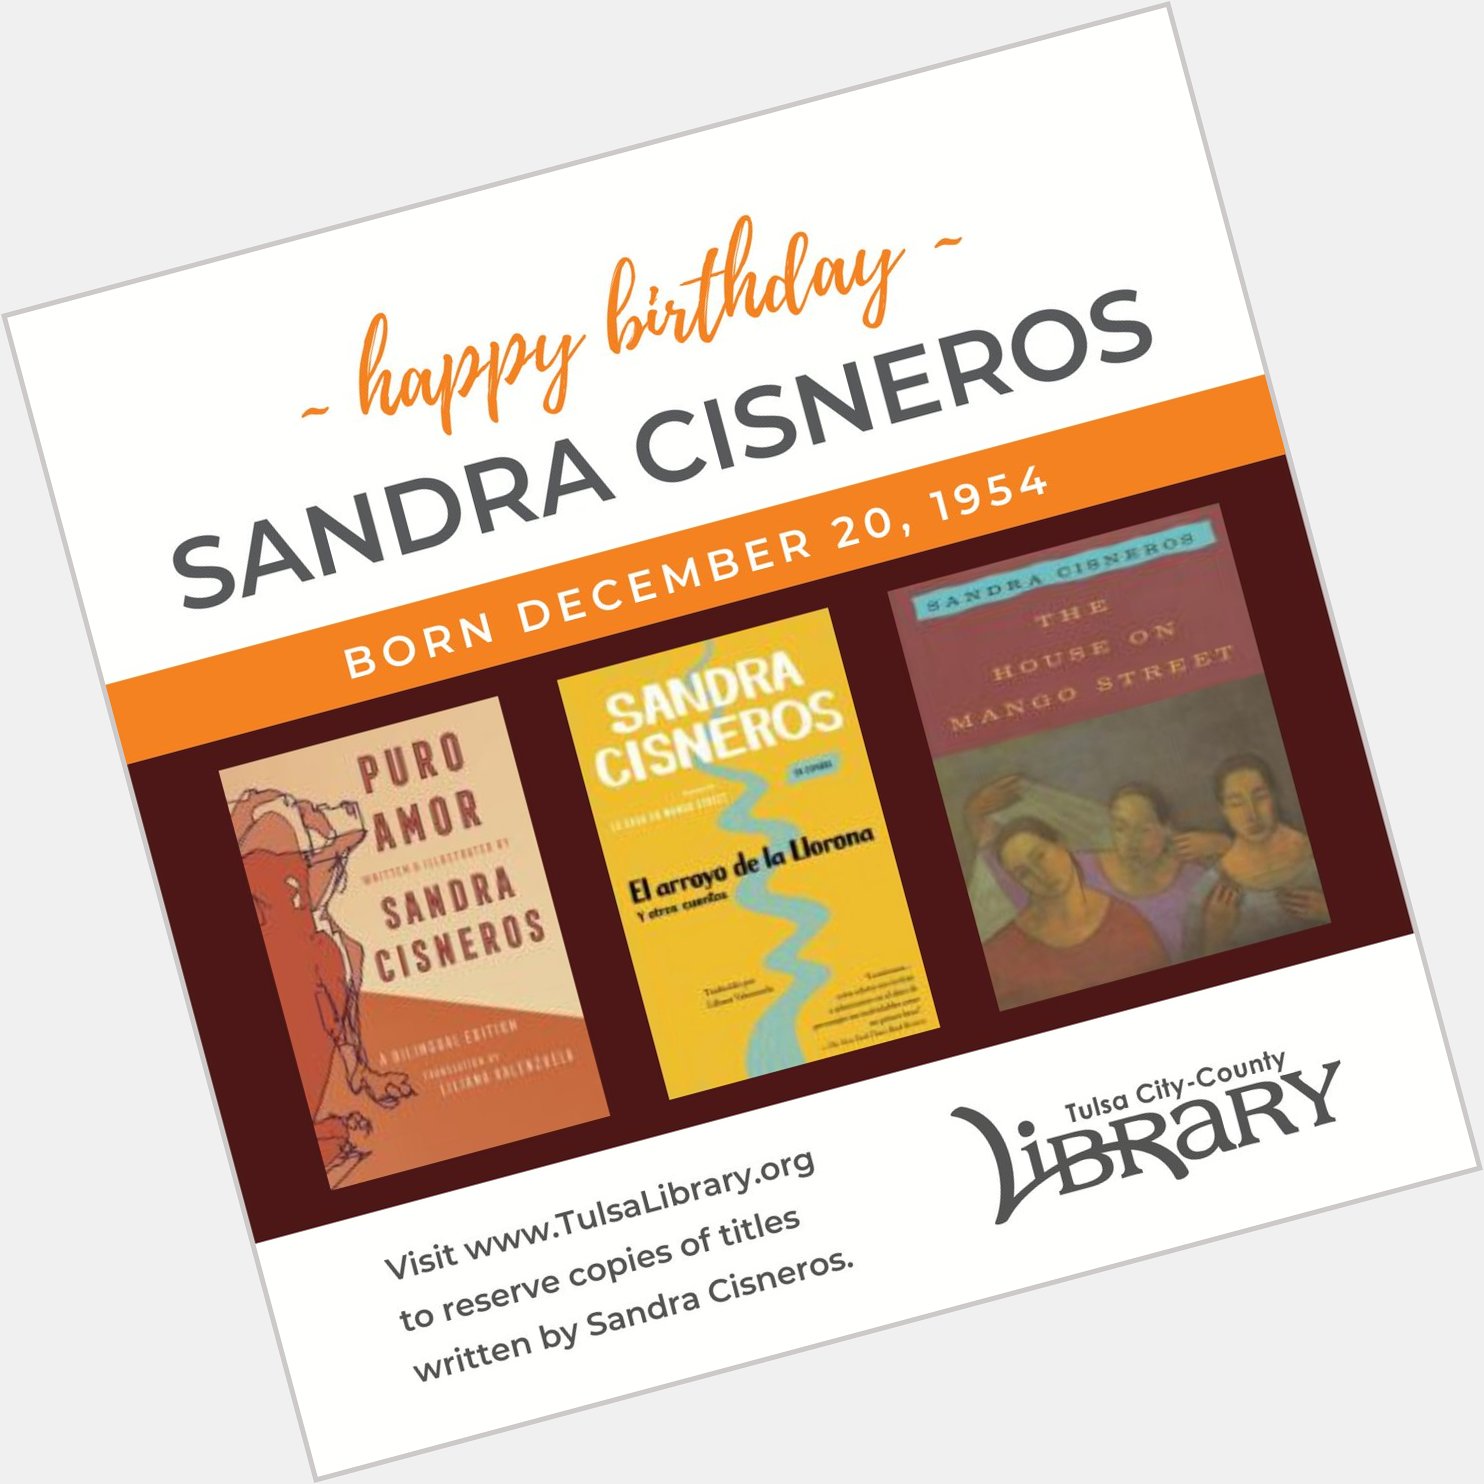 Happy birthday Sandra Cisneros! 